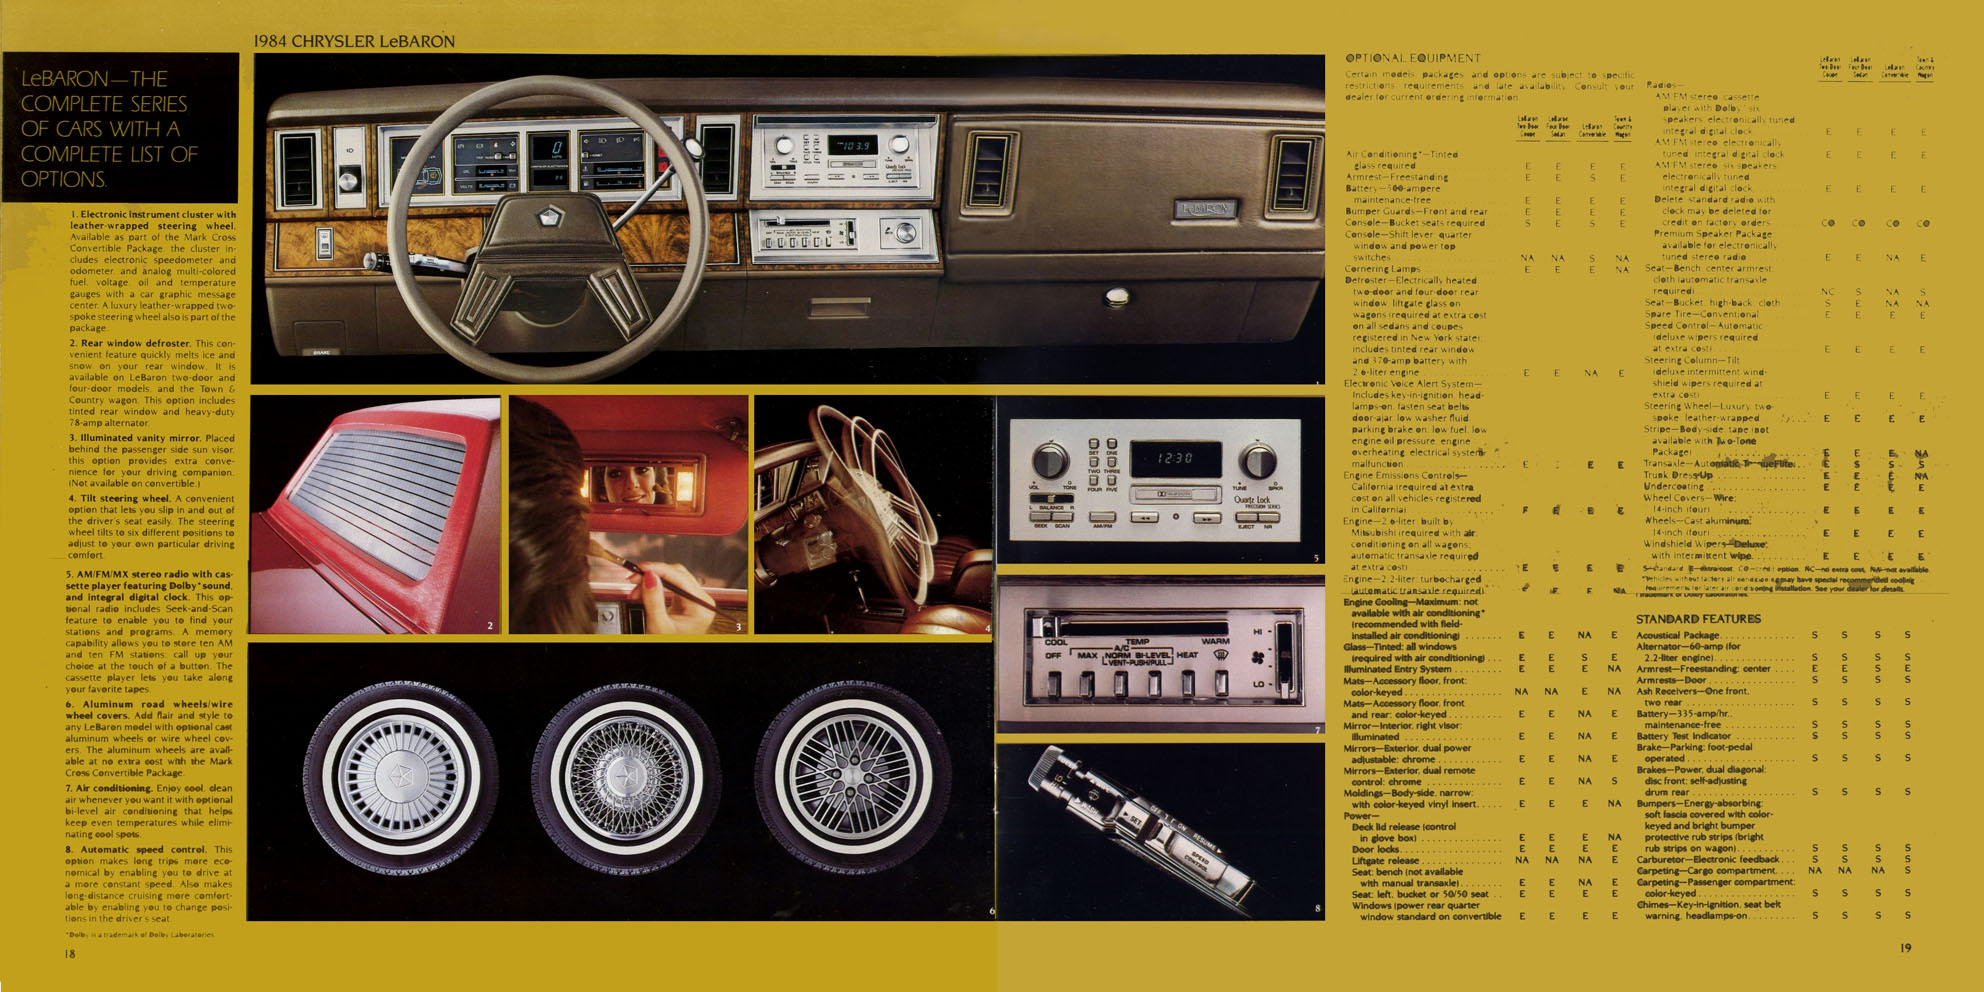 1984 Chrysler LeBaron-18-19